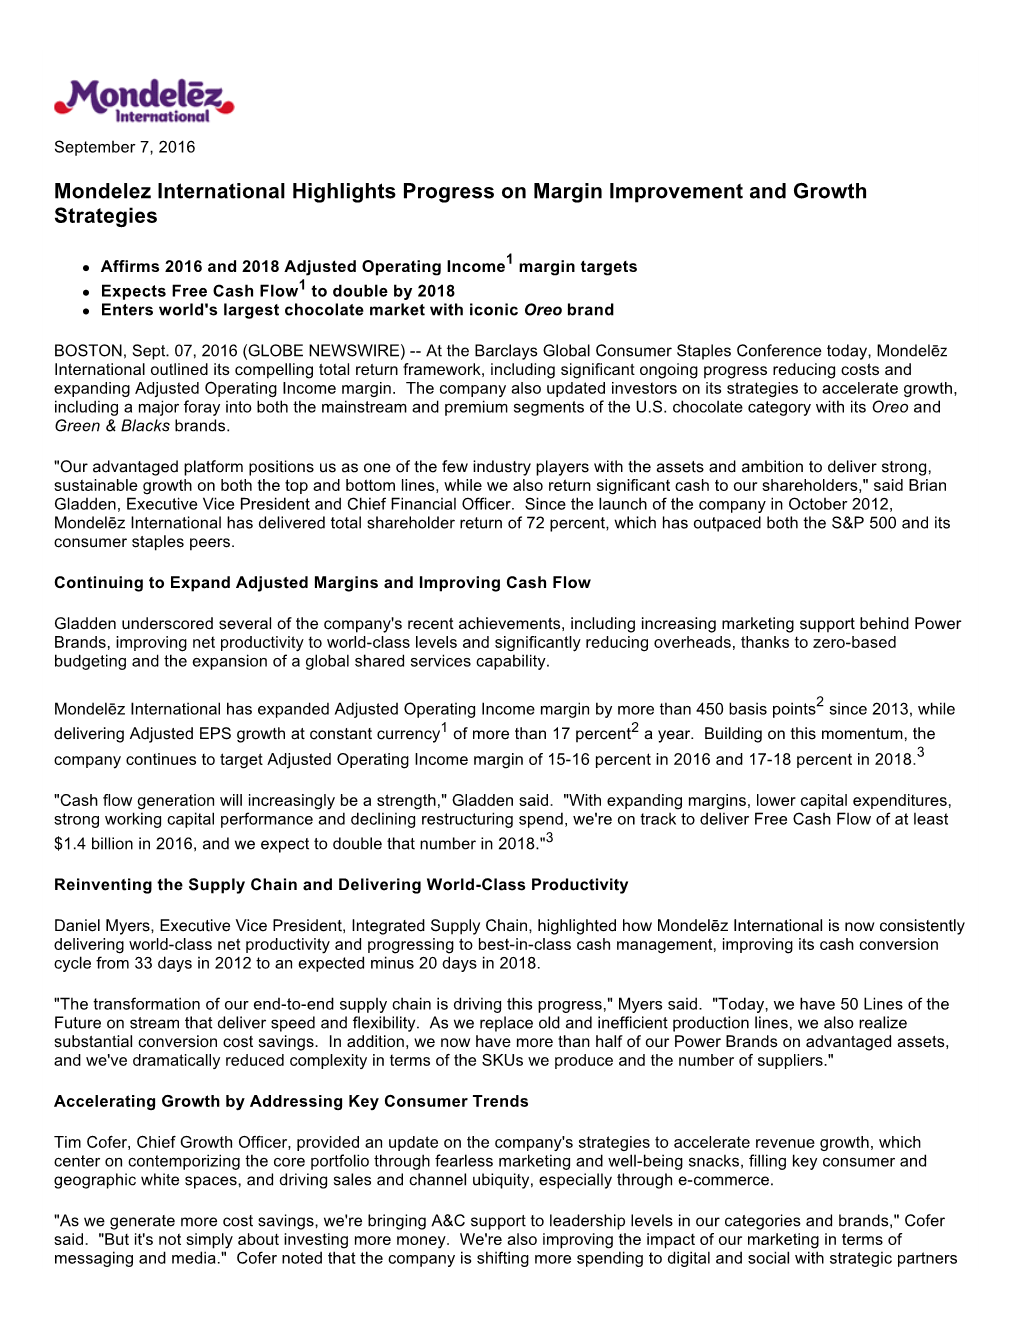 Mondelez International Highlights Progress on Margin Improvement and Growth Strategies